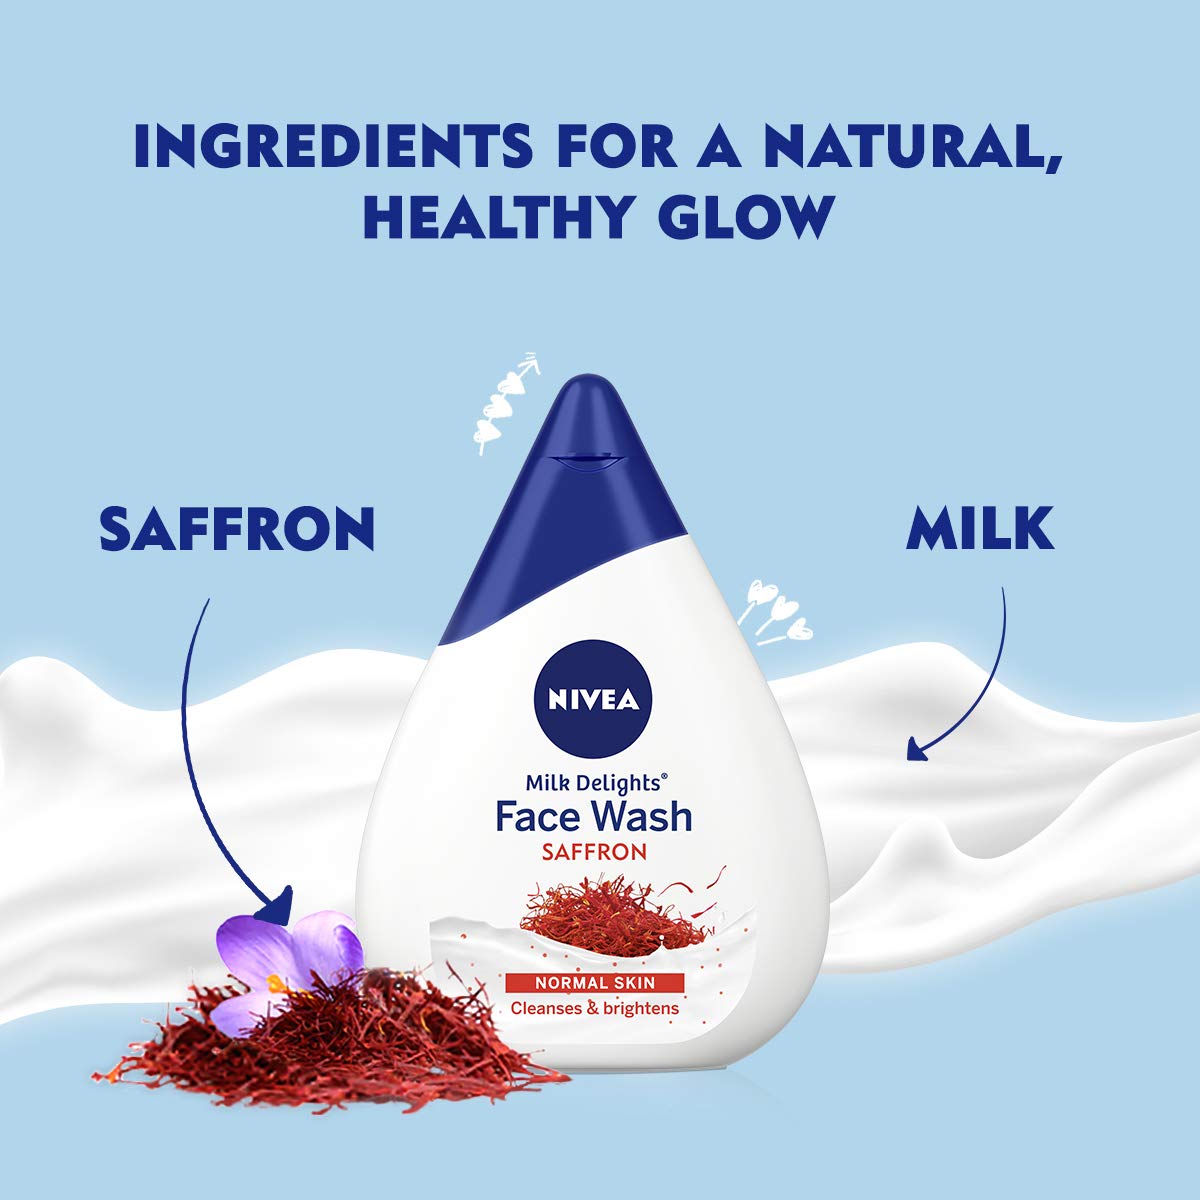 Nivea Milk Delights Face Wash (100ml) - Saffron